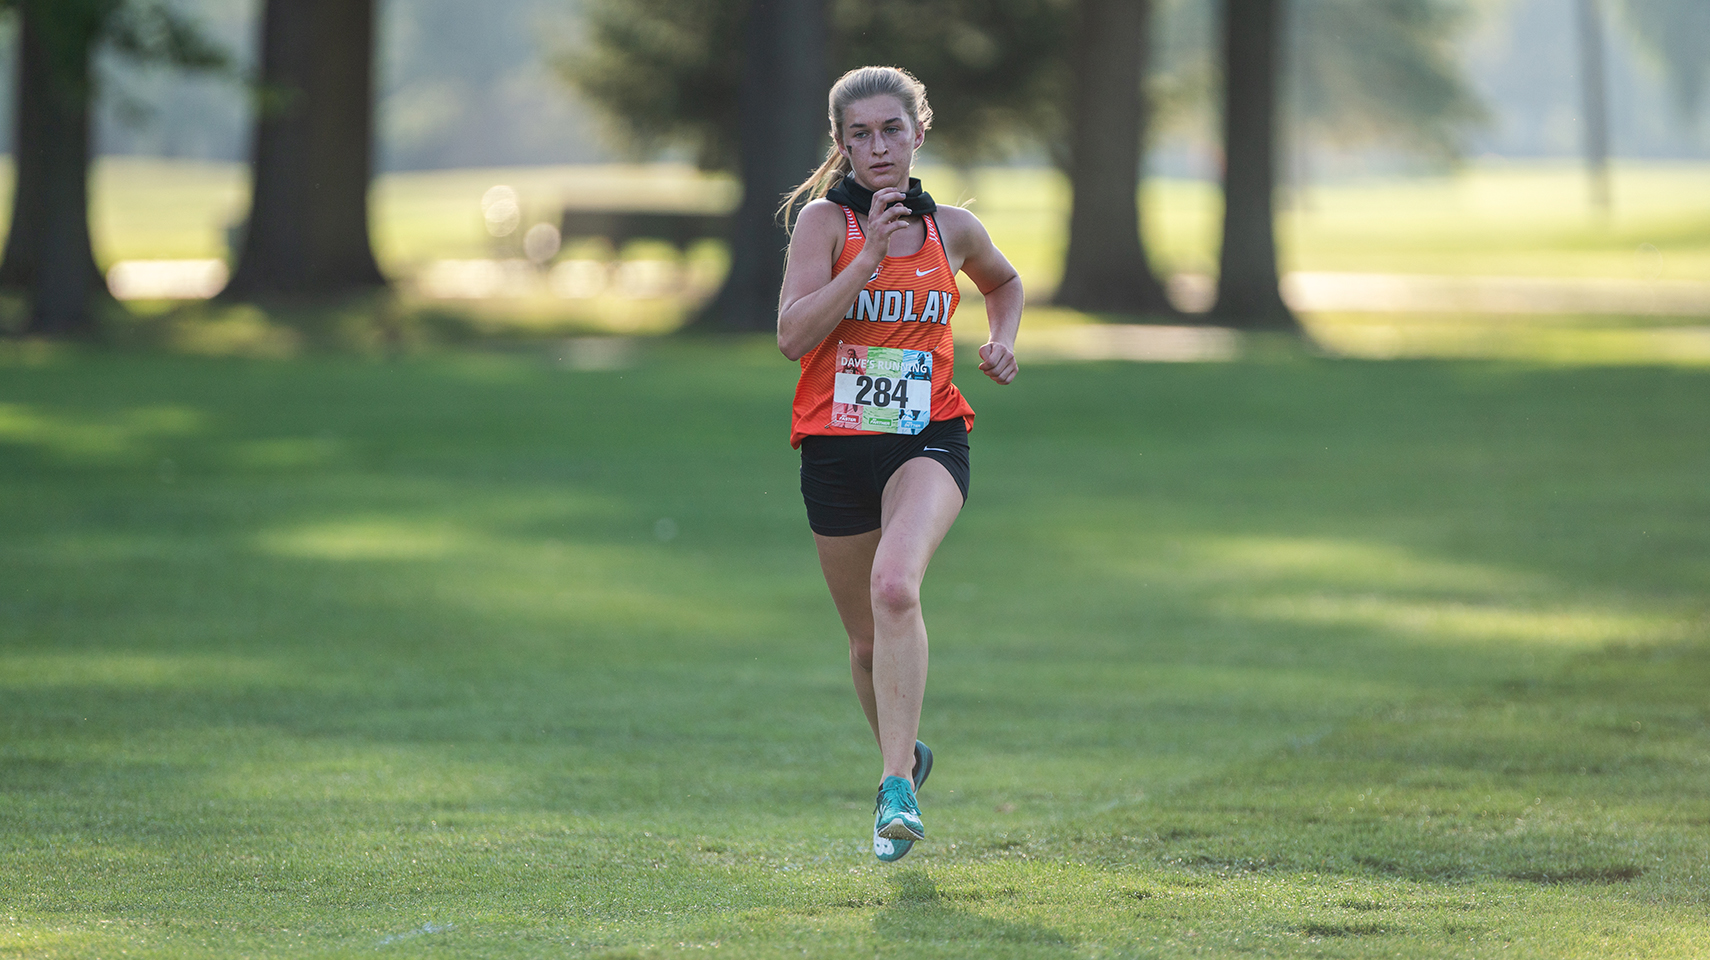 Women's cross country runner in orange racing through the shadows